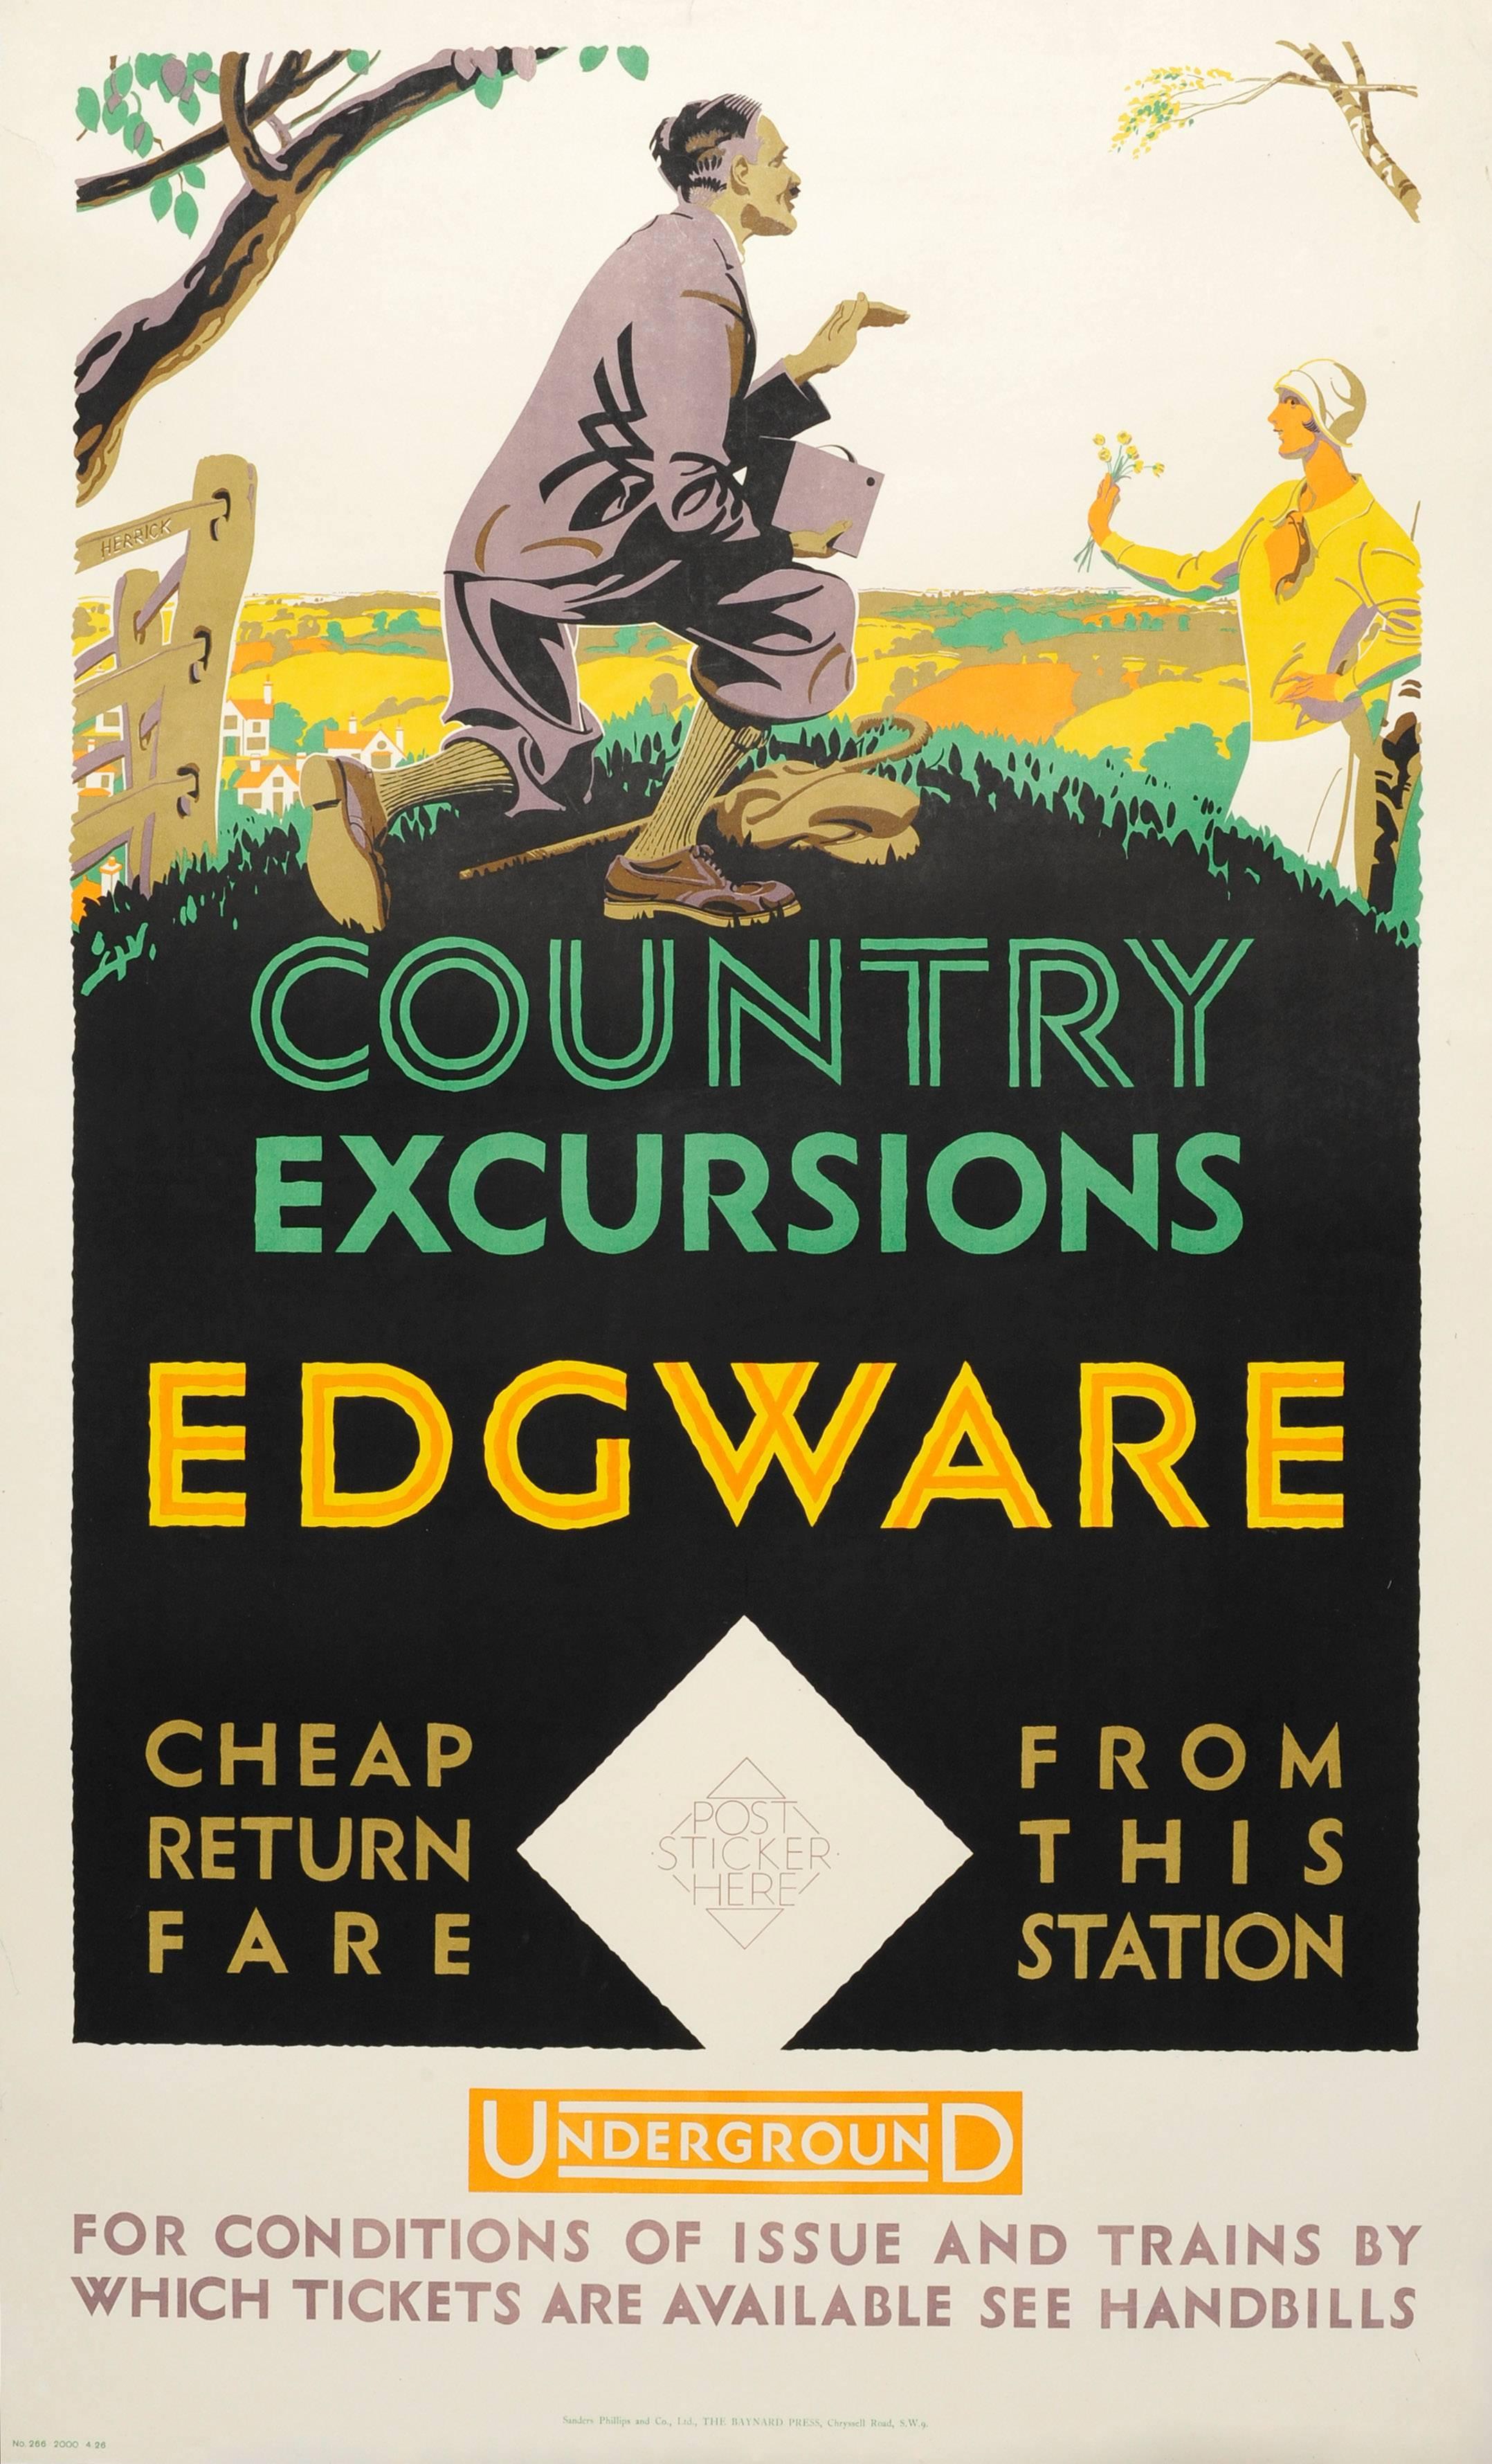 Frederick Charles Herrick Print - Original Vintage 1926 London Underground Poster - Country Excursions - Edgware